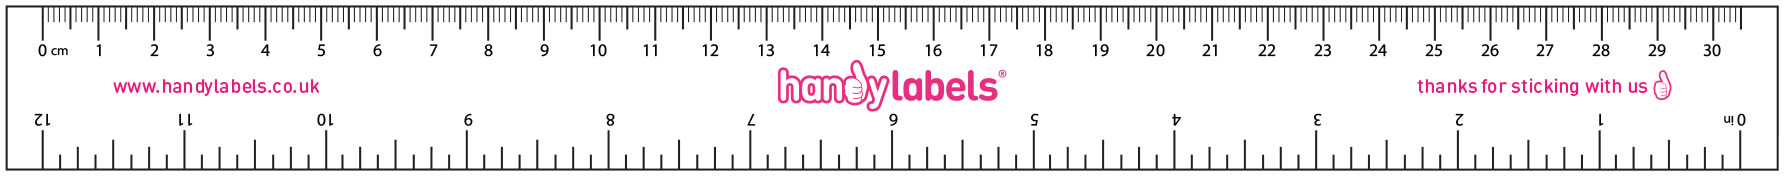 handy labels printable ruler